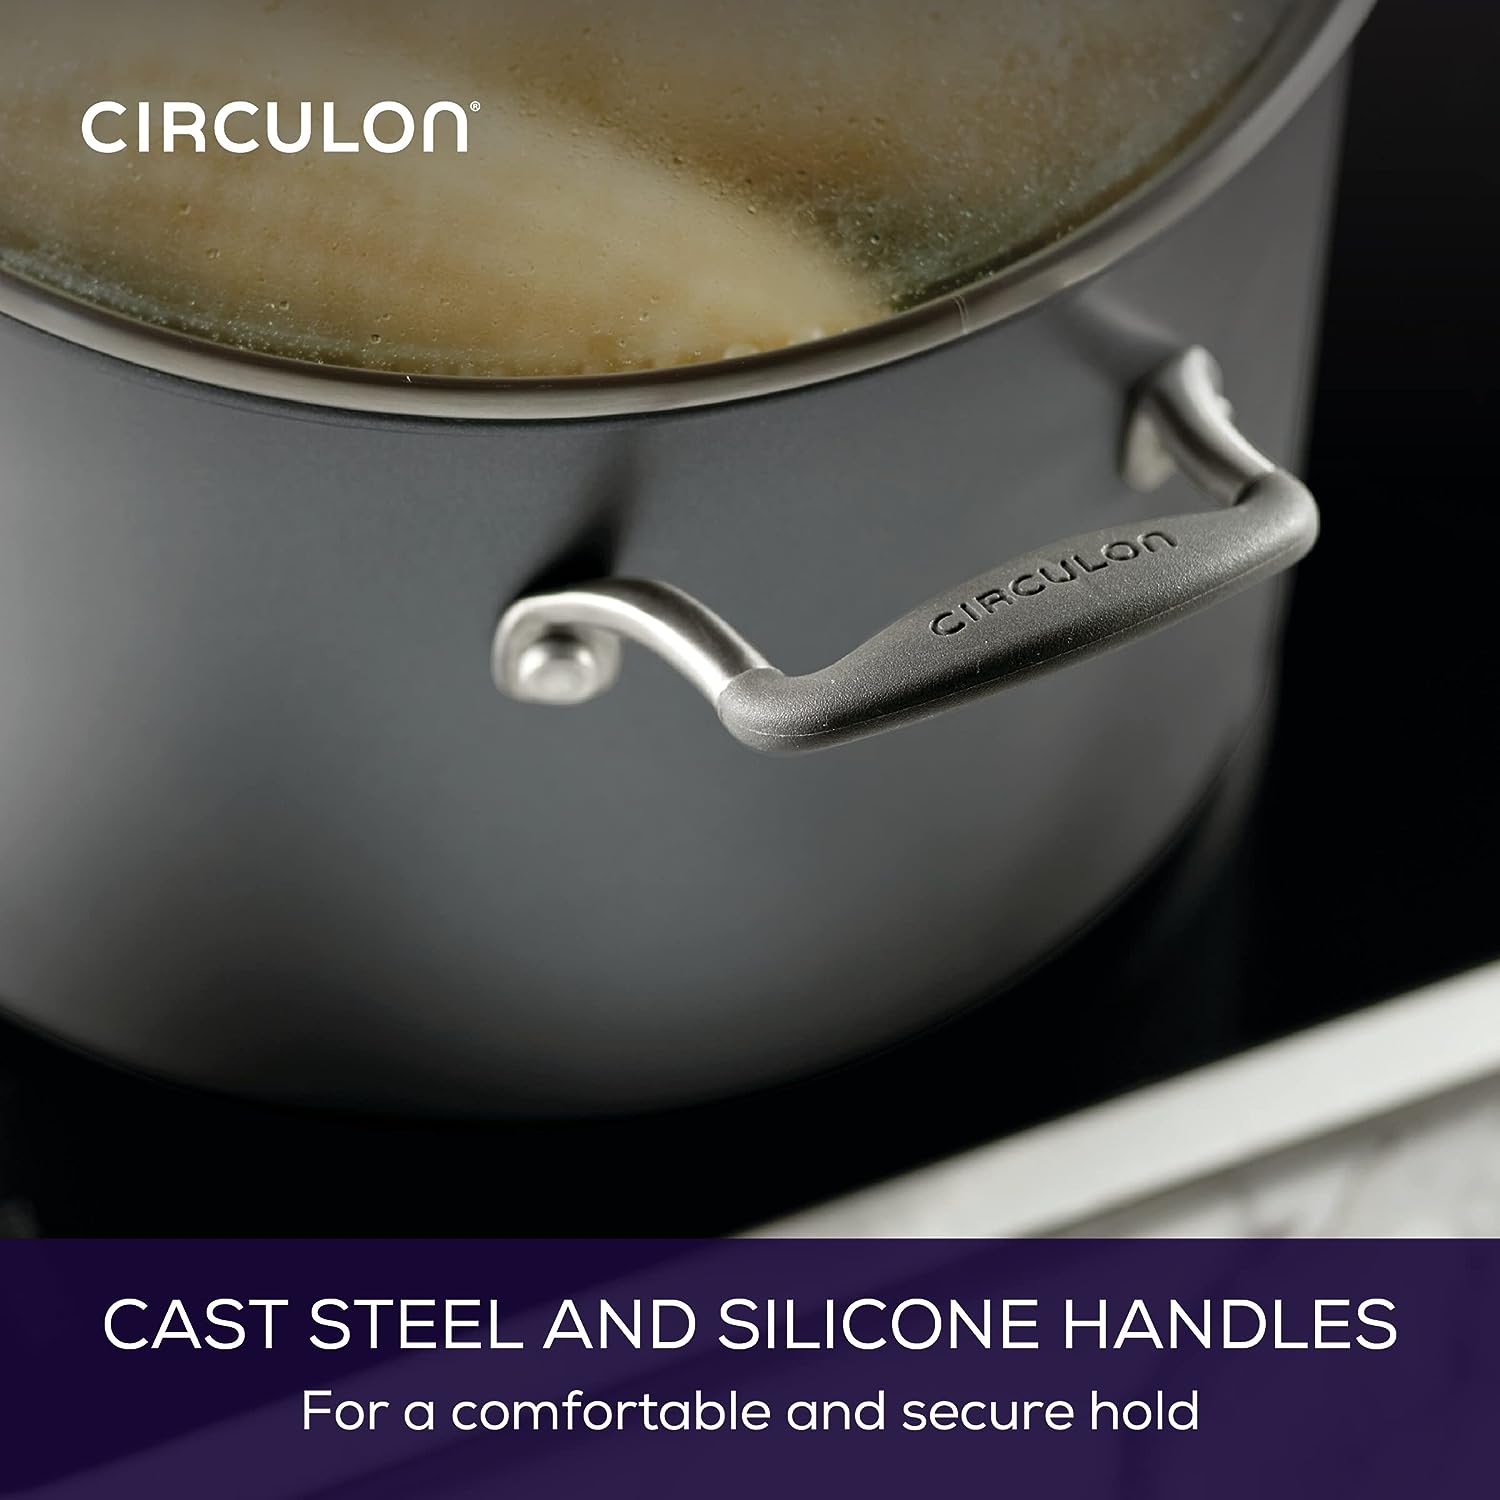 Circulon A1 Series with ScratchDefense Technology Nonstick